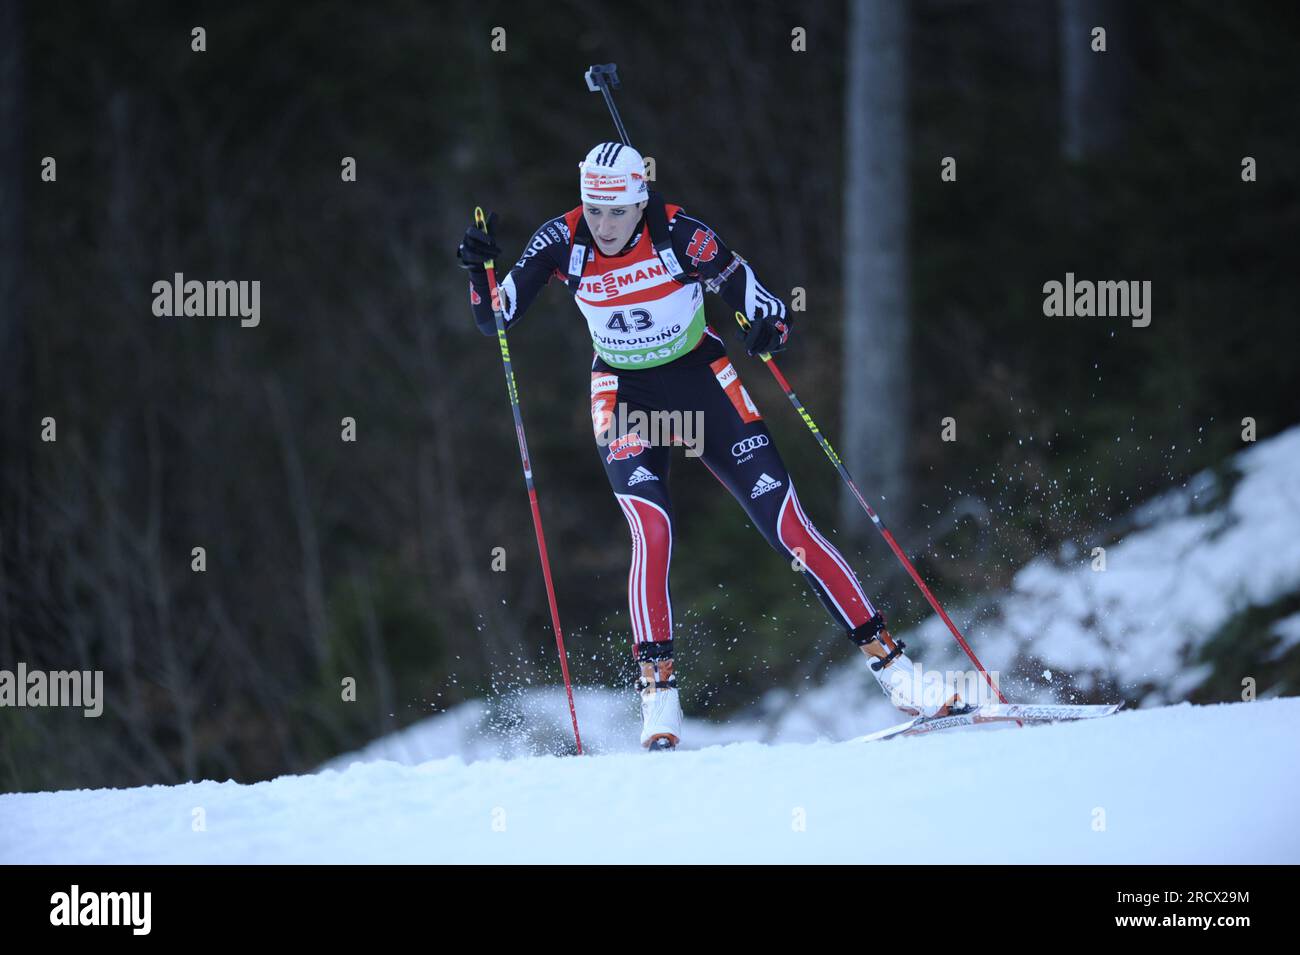 Sabrina BUCHHOLZ Aktion Biathlon Verfolgung 10km Verfolgung der Frauen 16.1.2011 Stock Photo